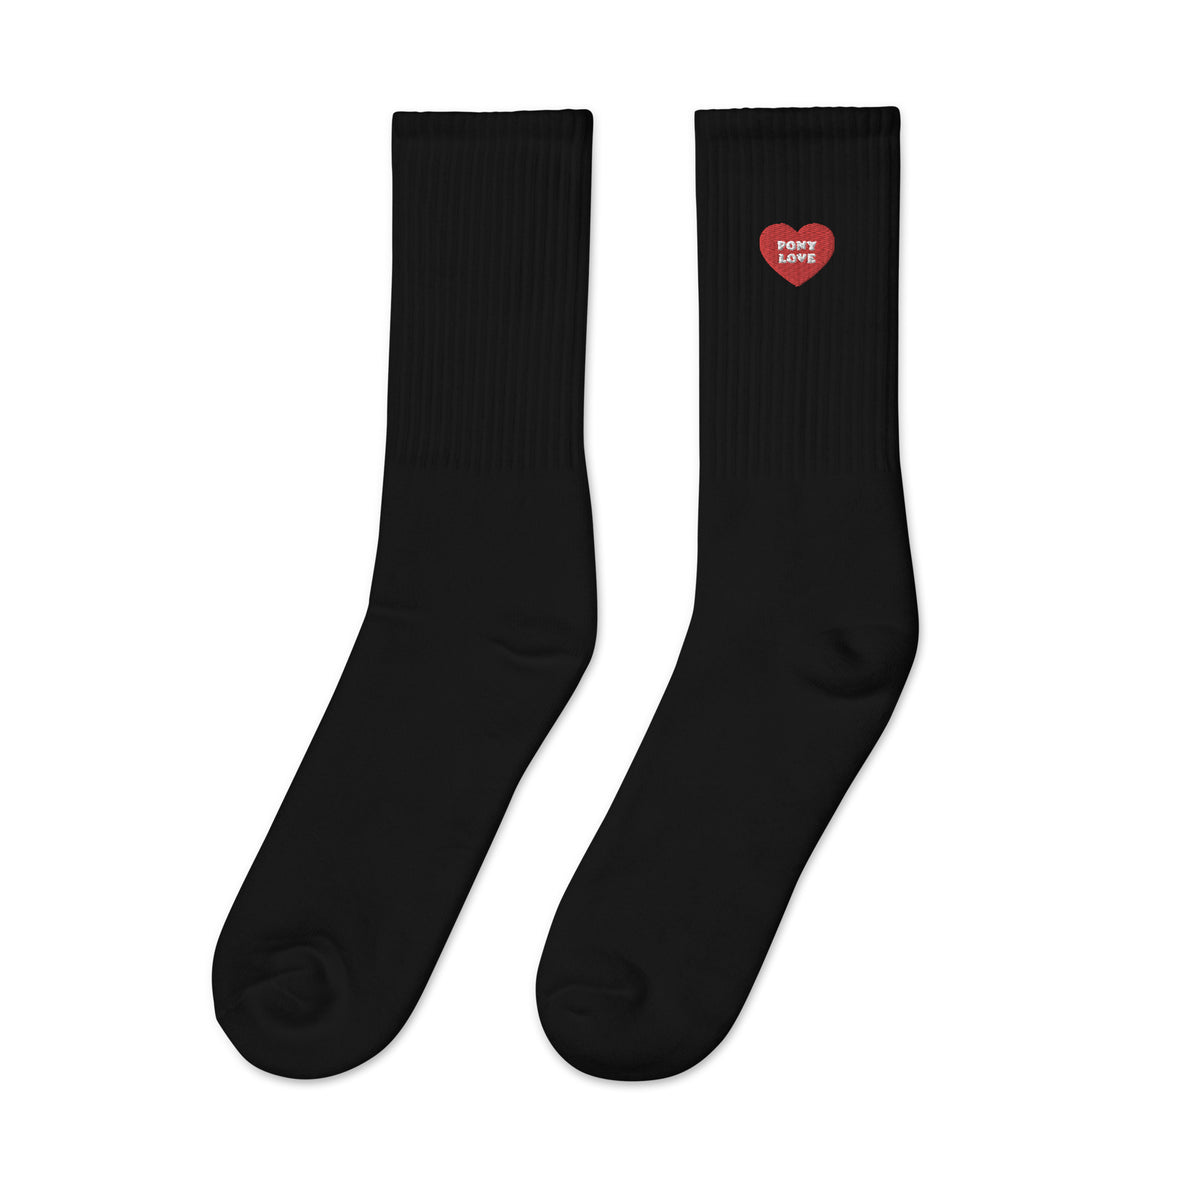 Pony Love Embroidered socks